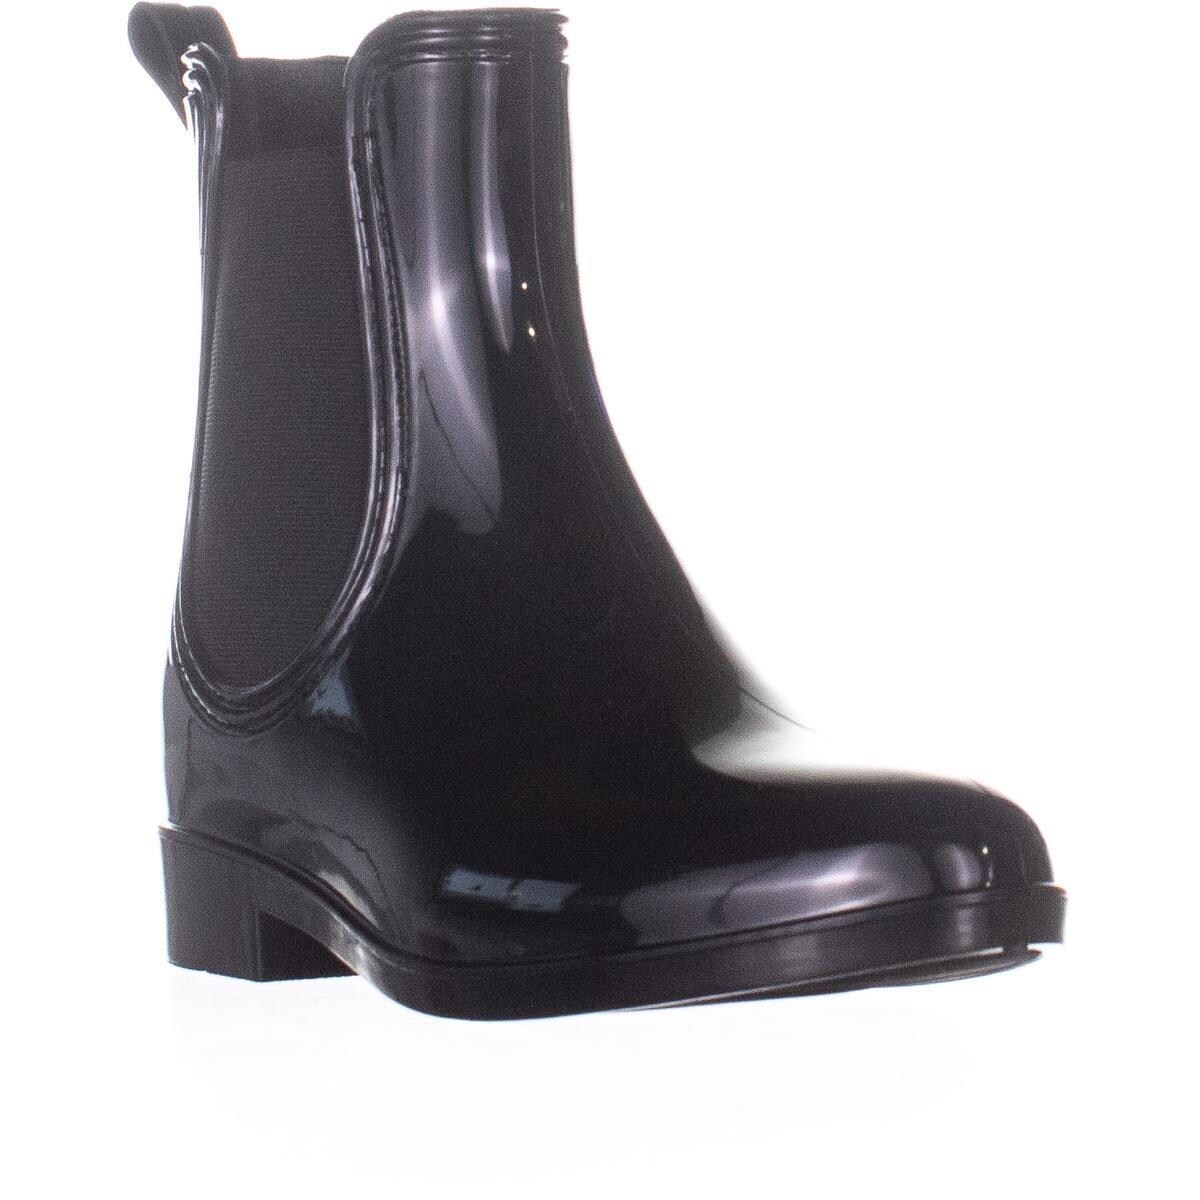 inc raelynn rain boots